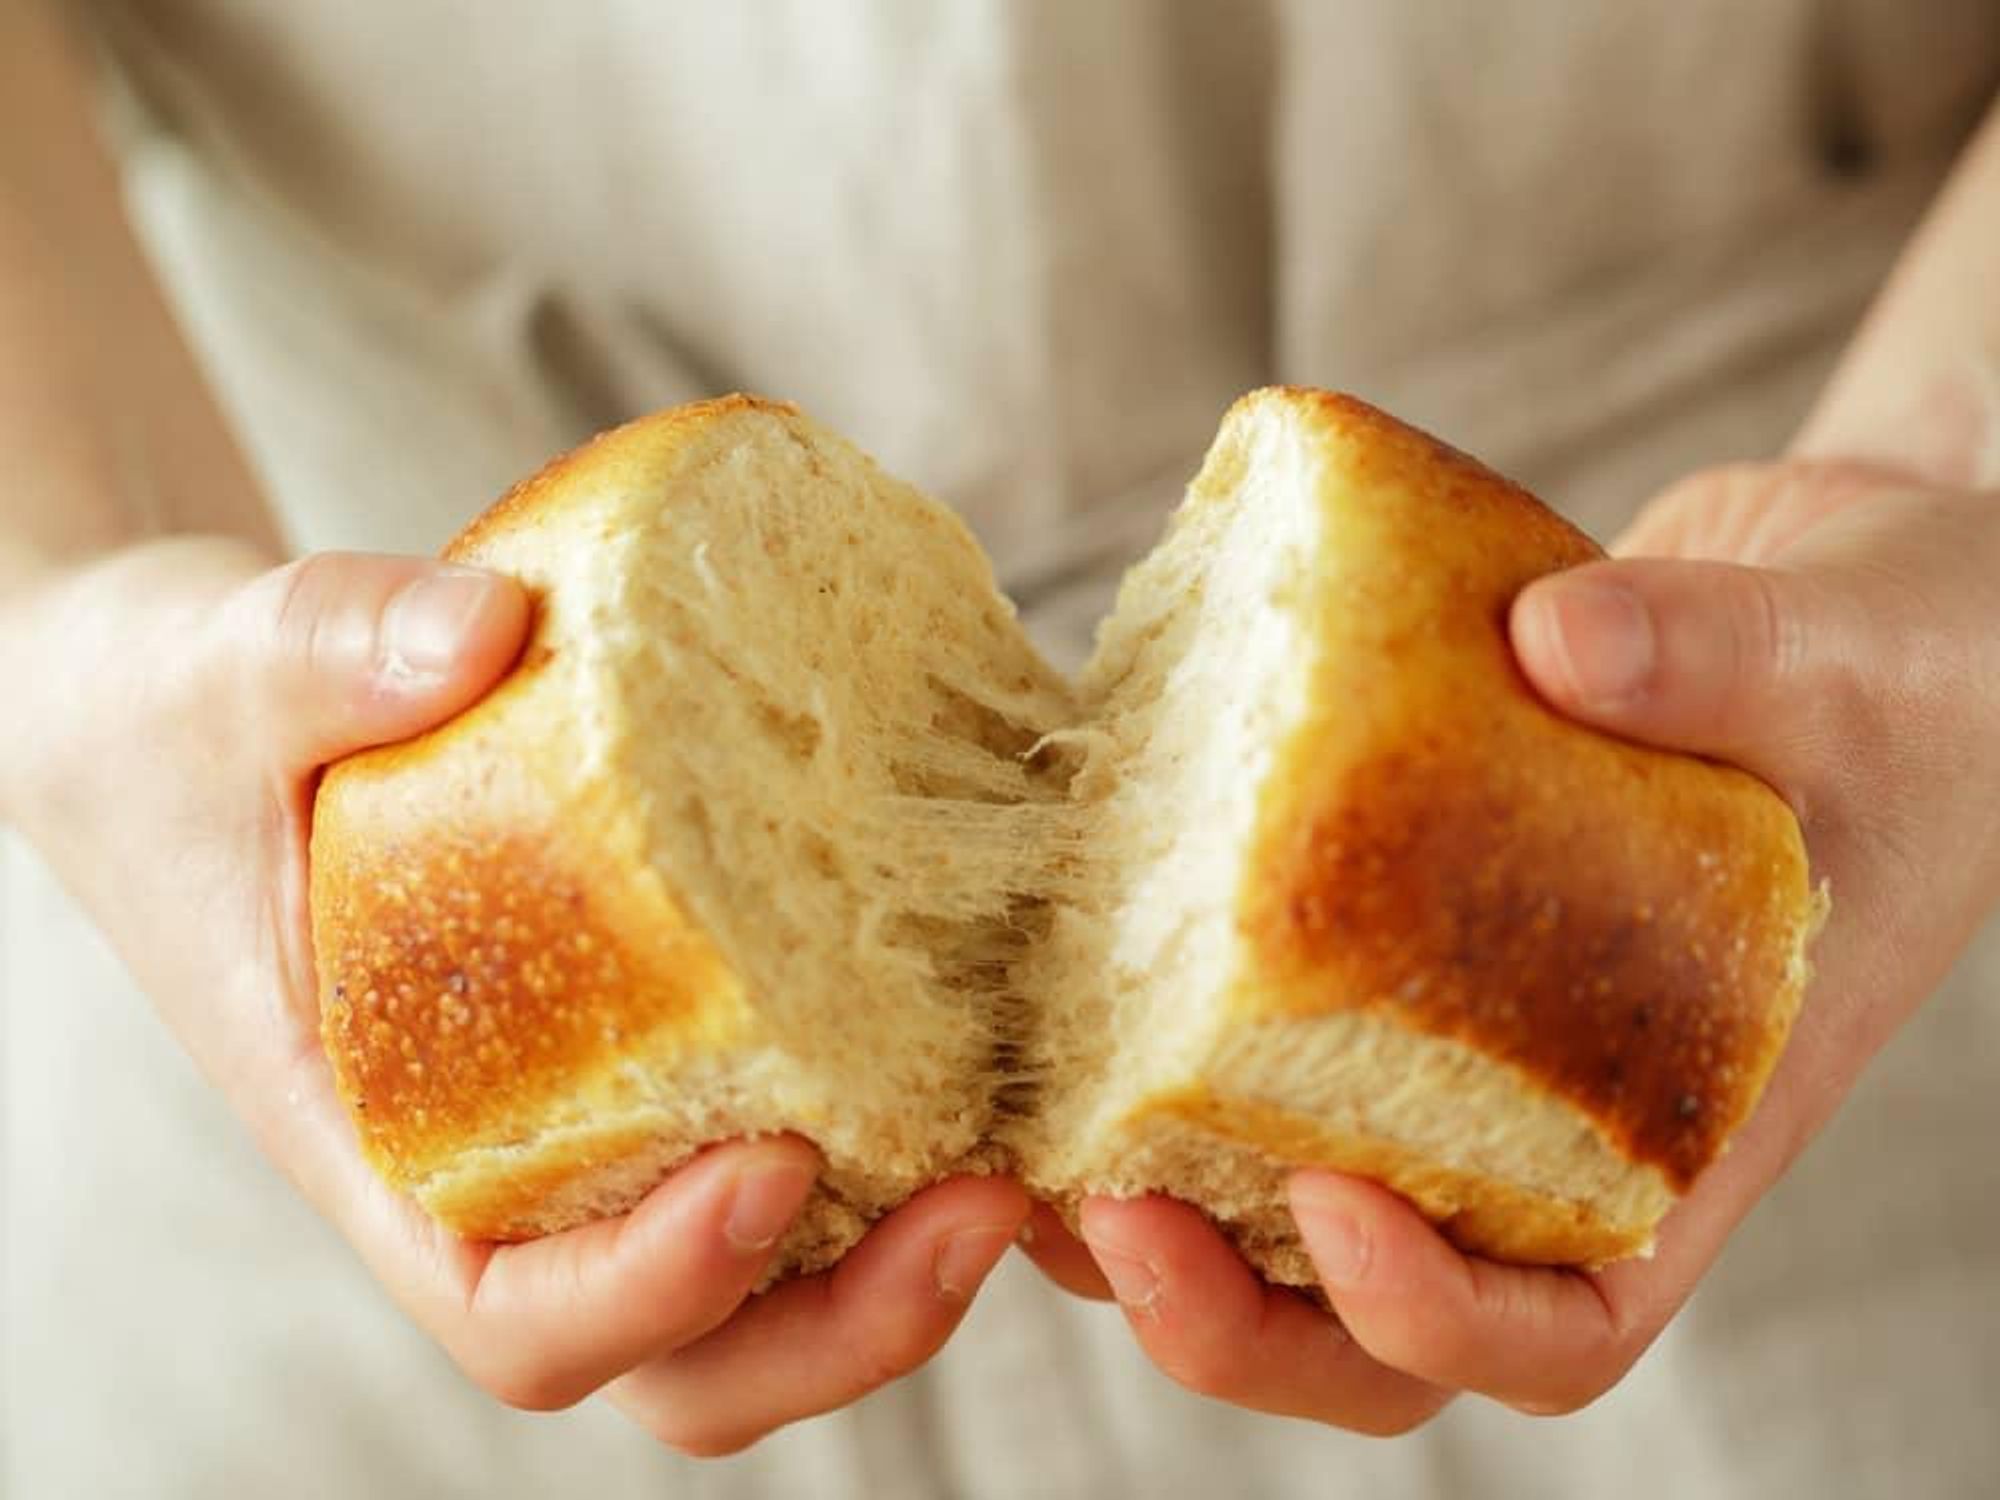 Person breaking apart bread